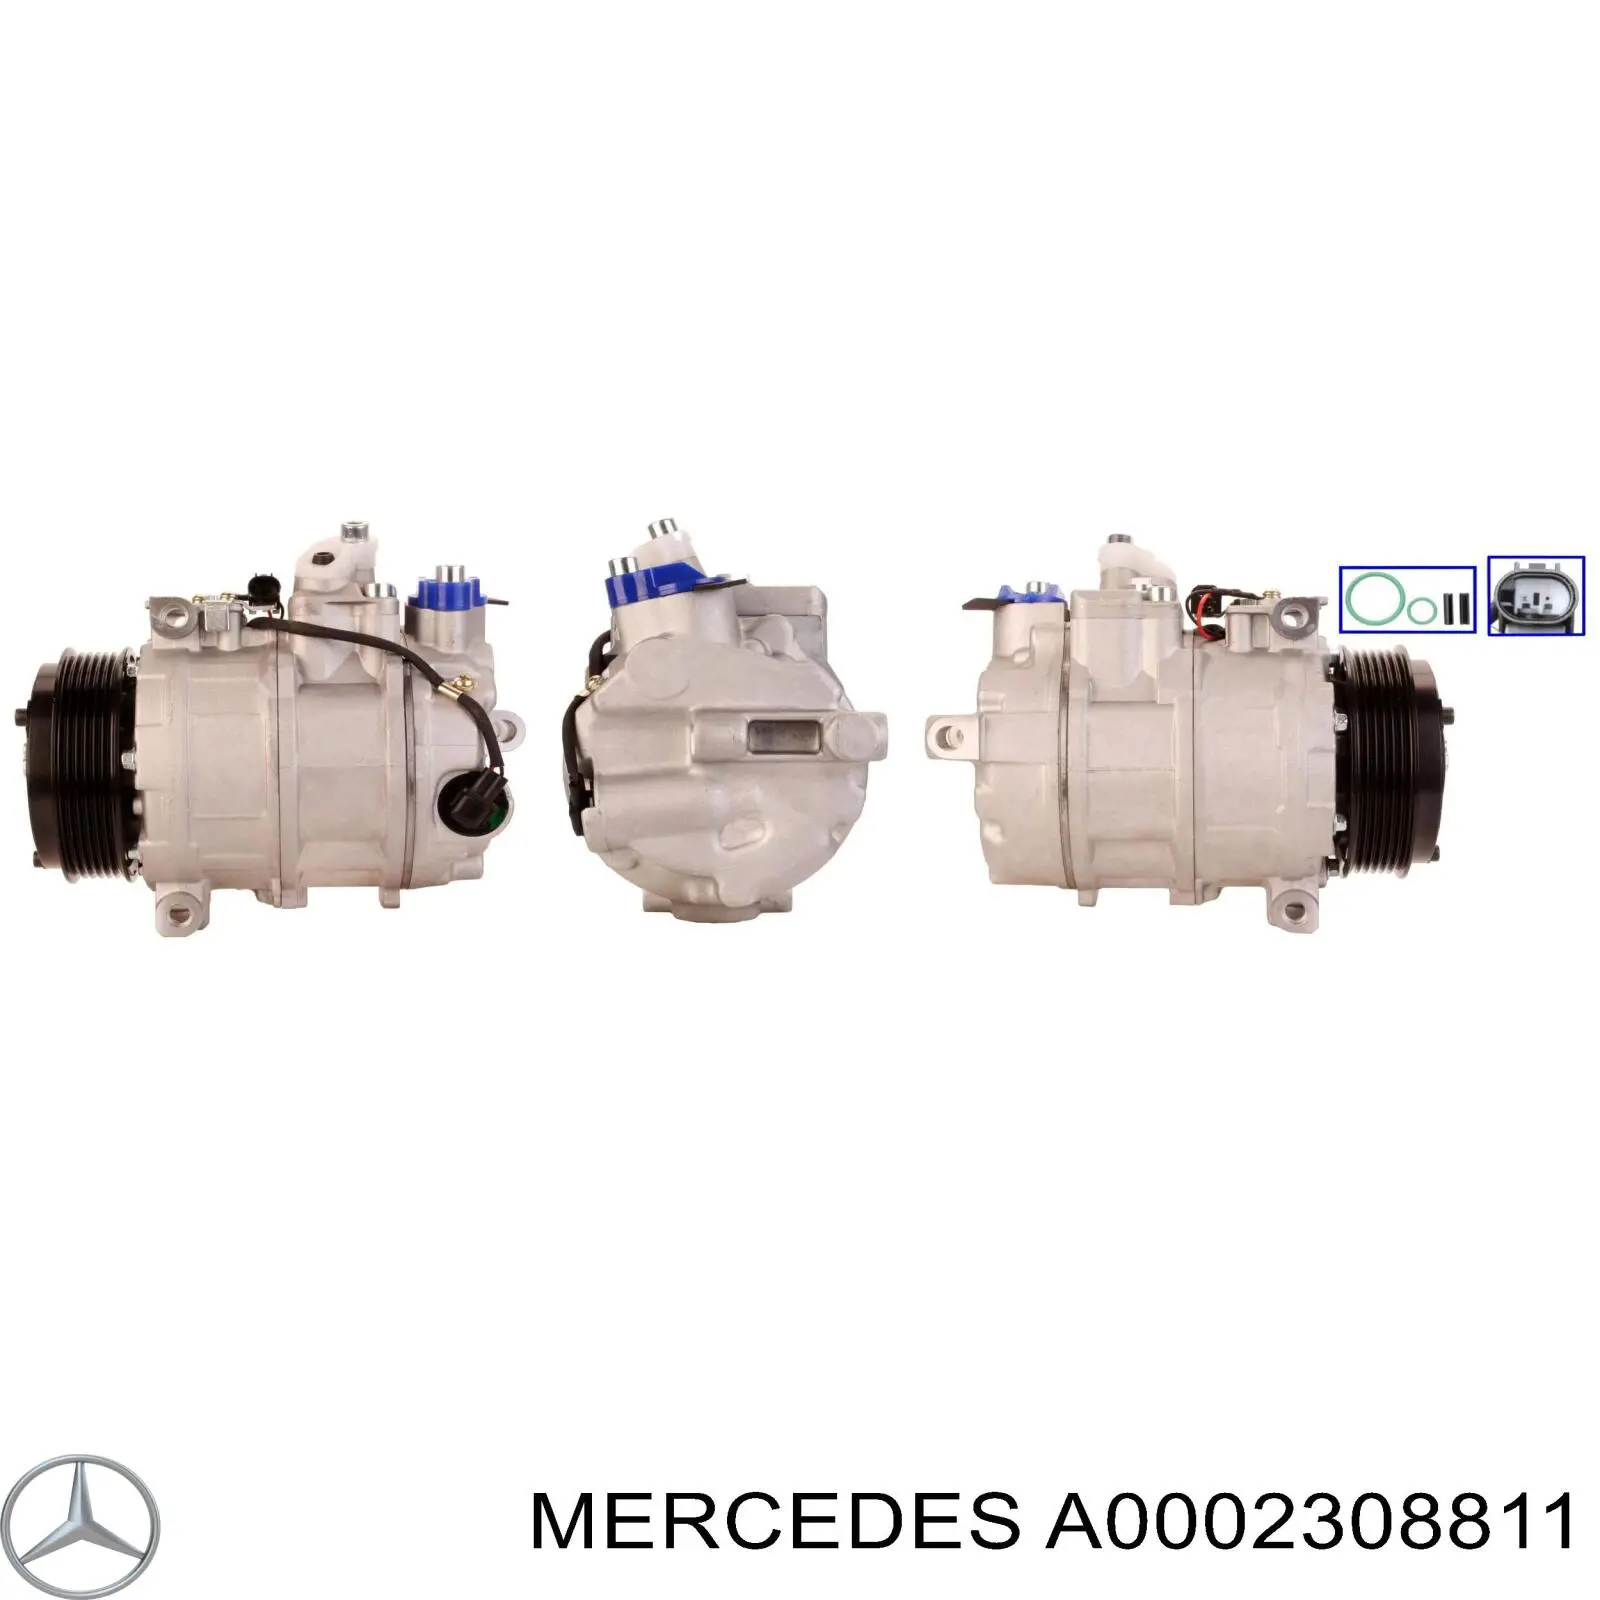 A0002308811 Mercedes compresor de aire acondicionado